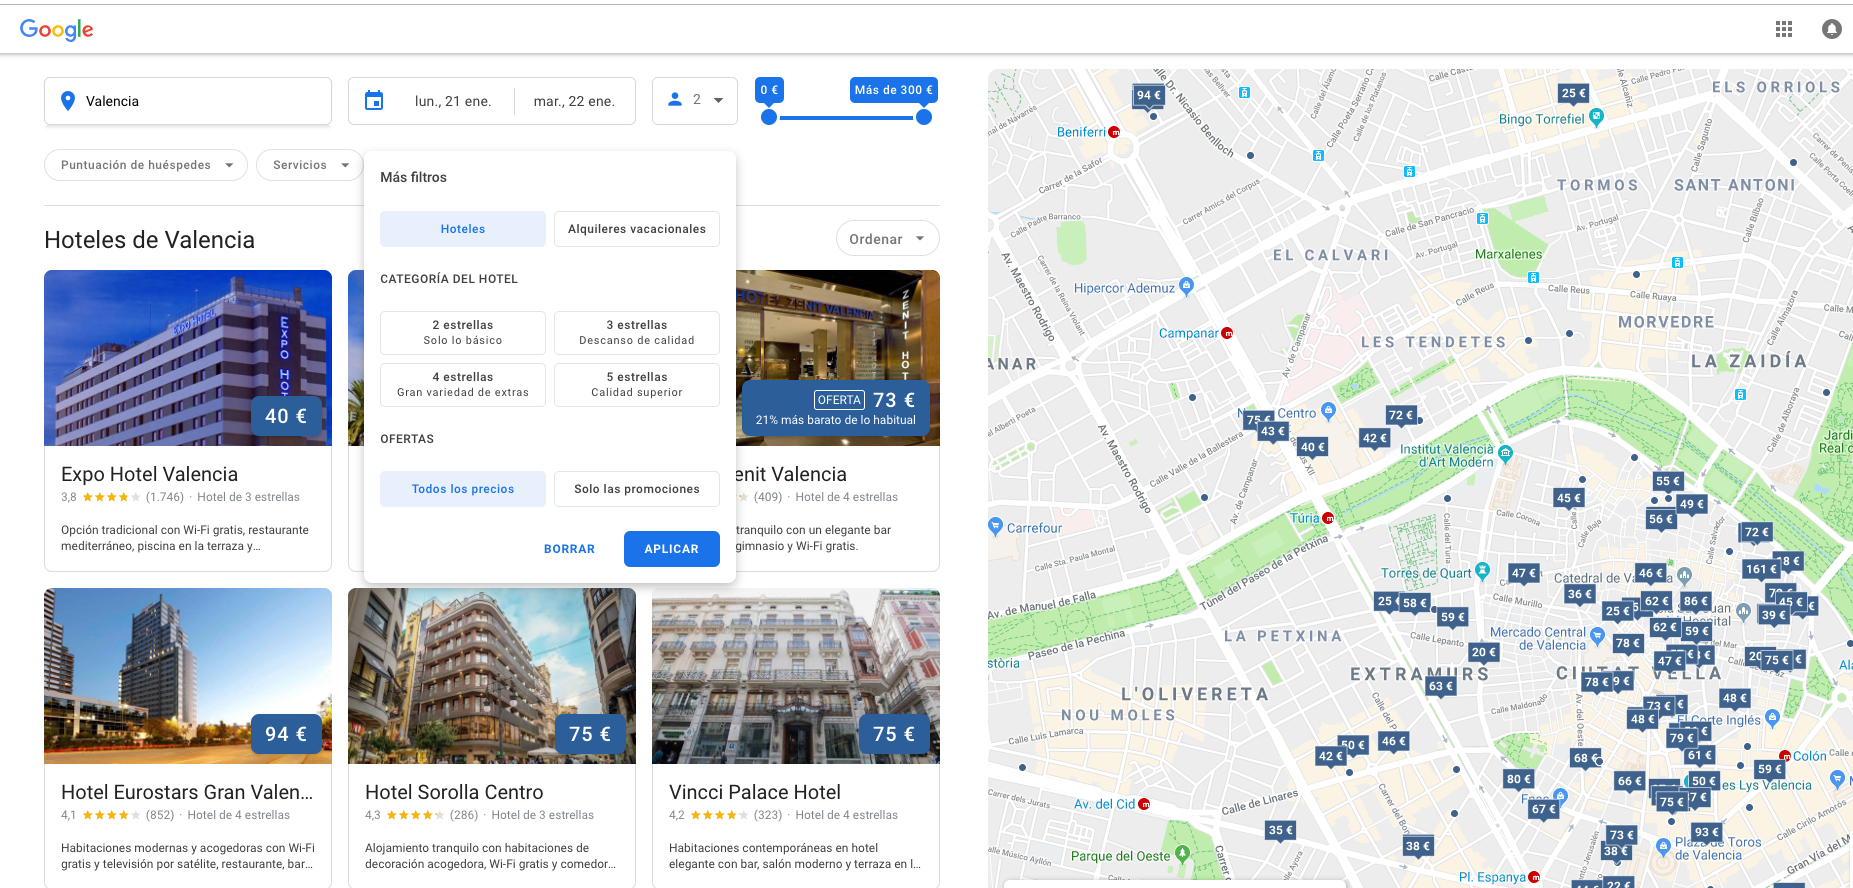 Google Hotel Ads en valencia